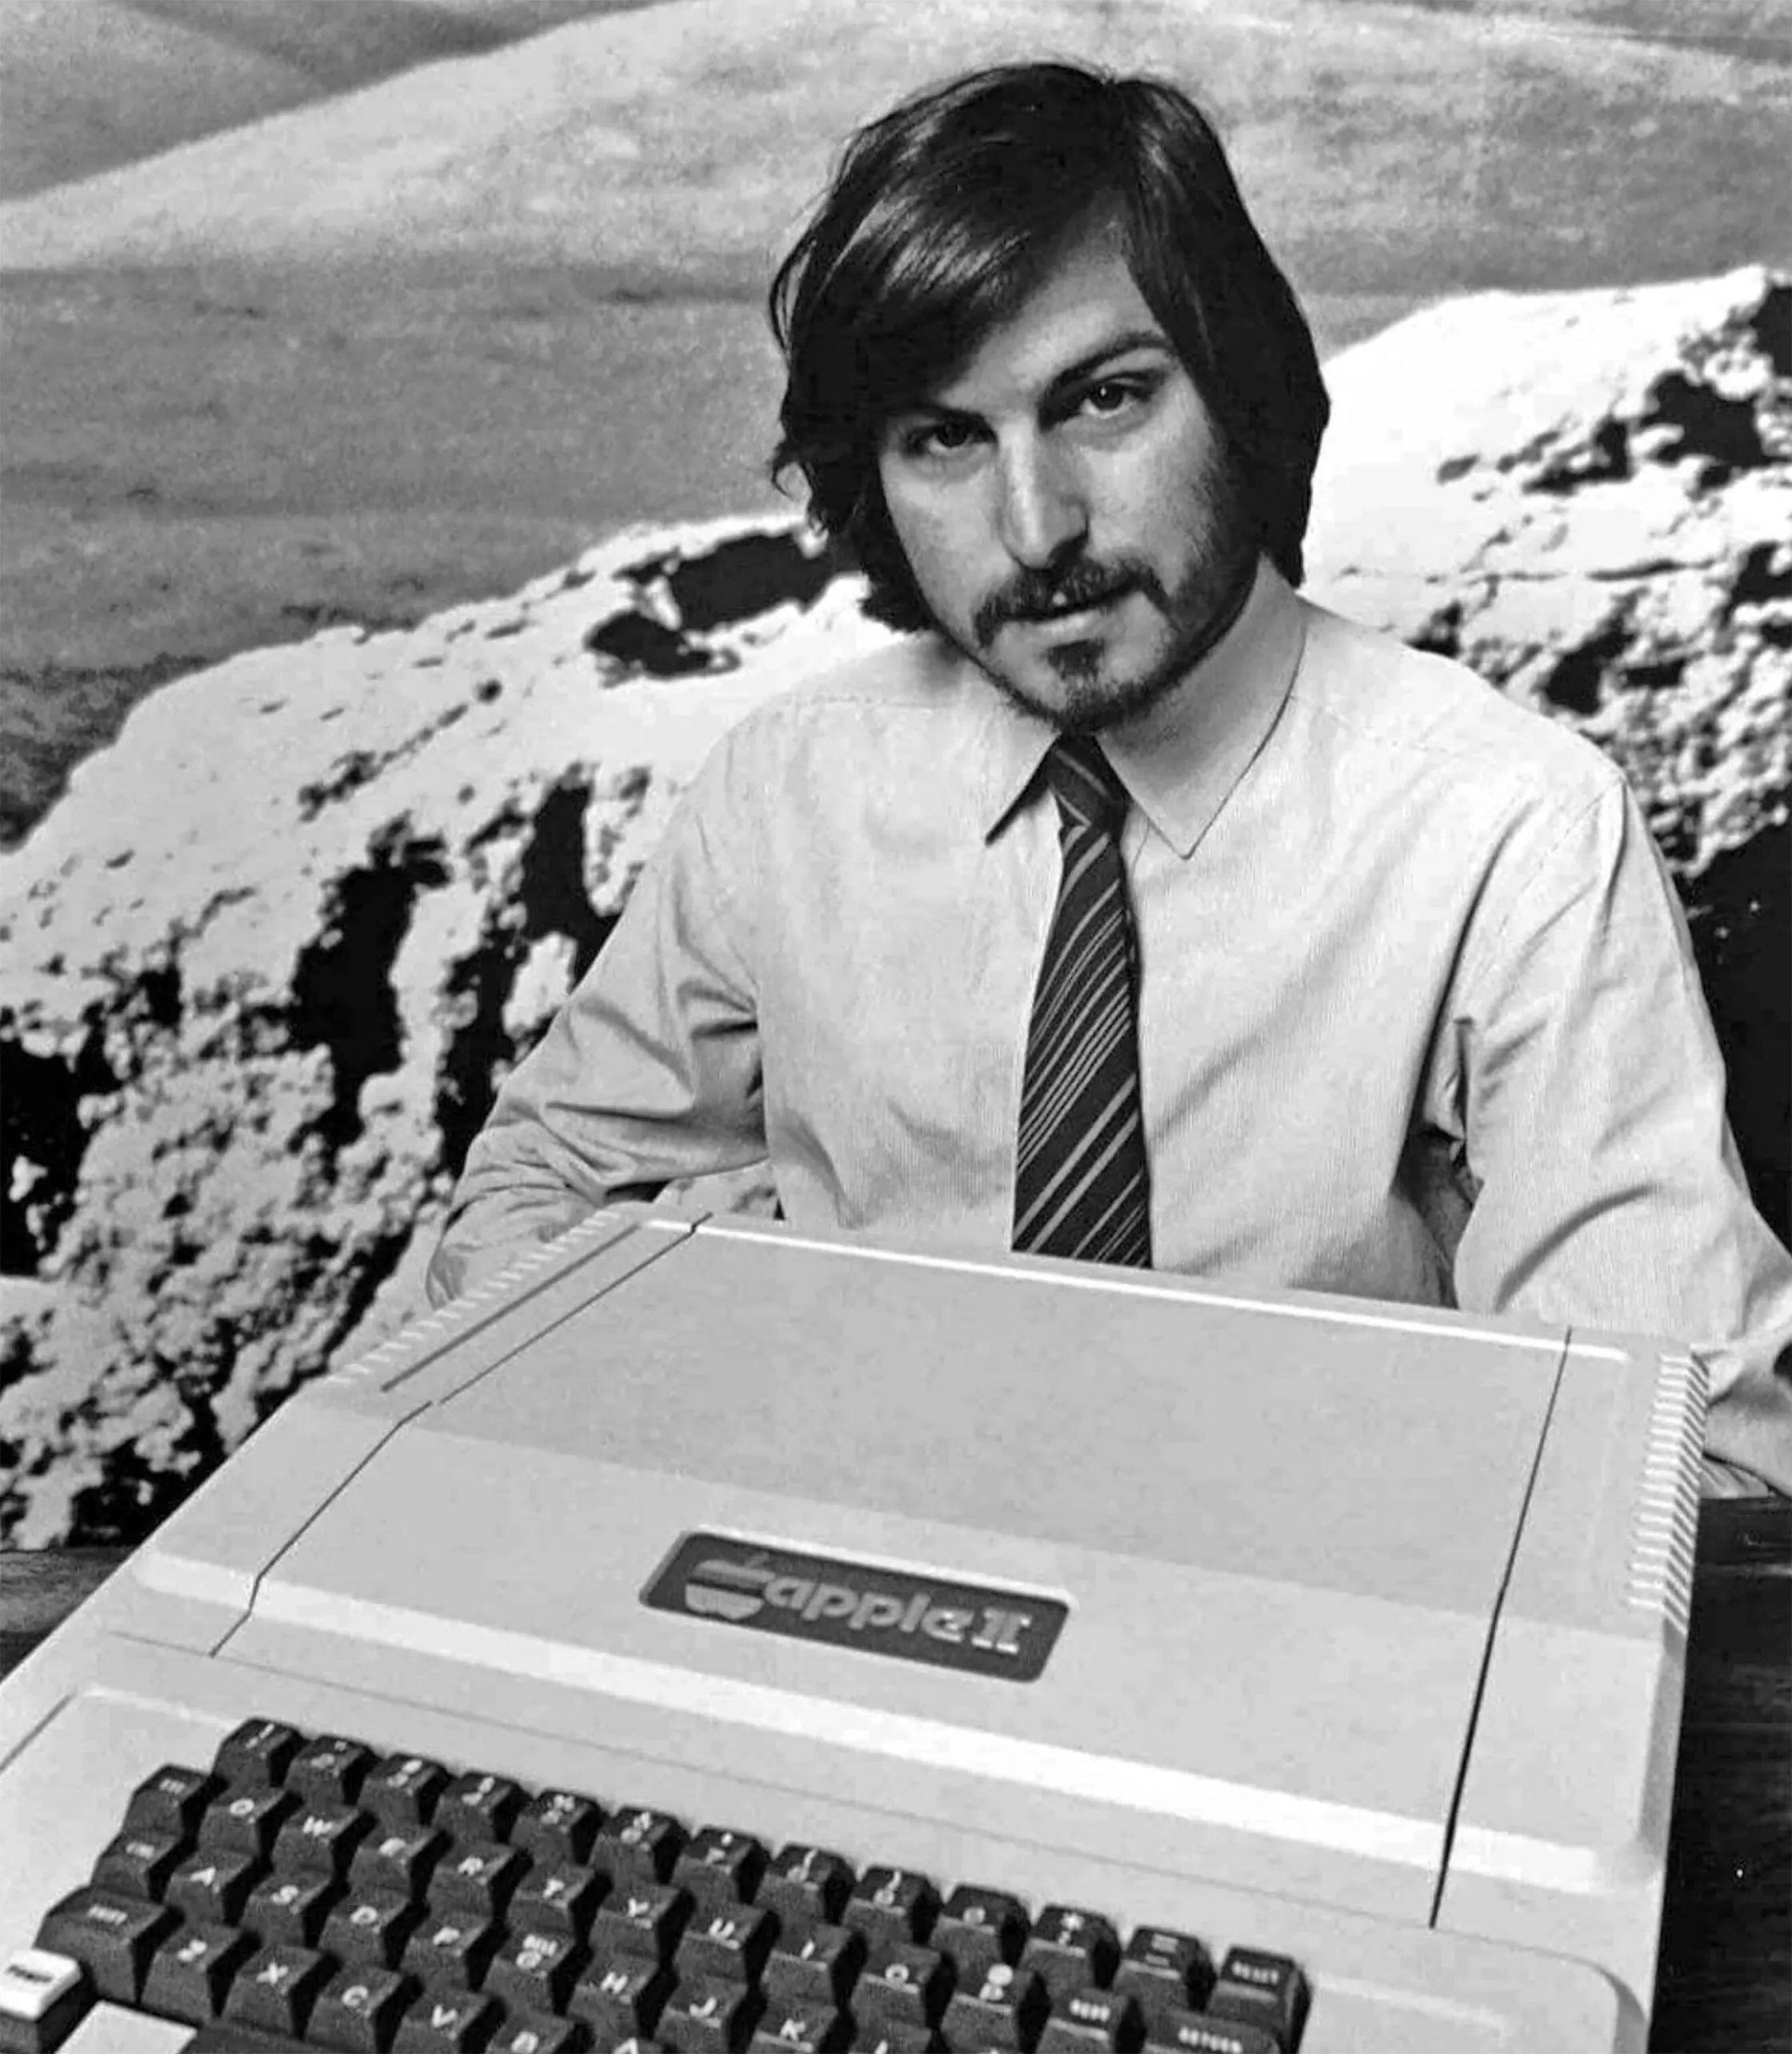 A photograph of Steve Jobs with the Apple II circa 1977.